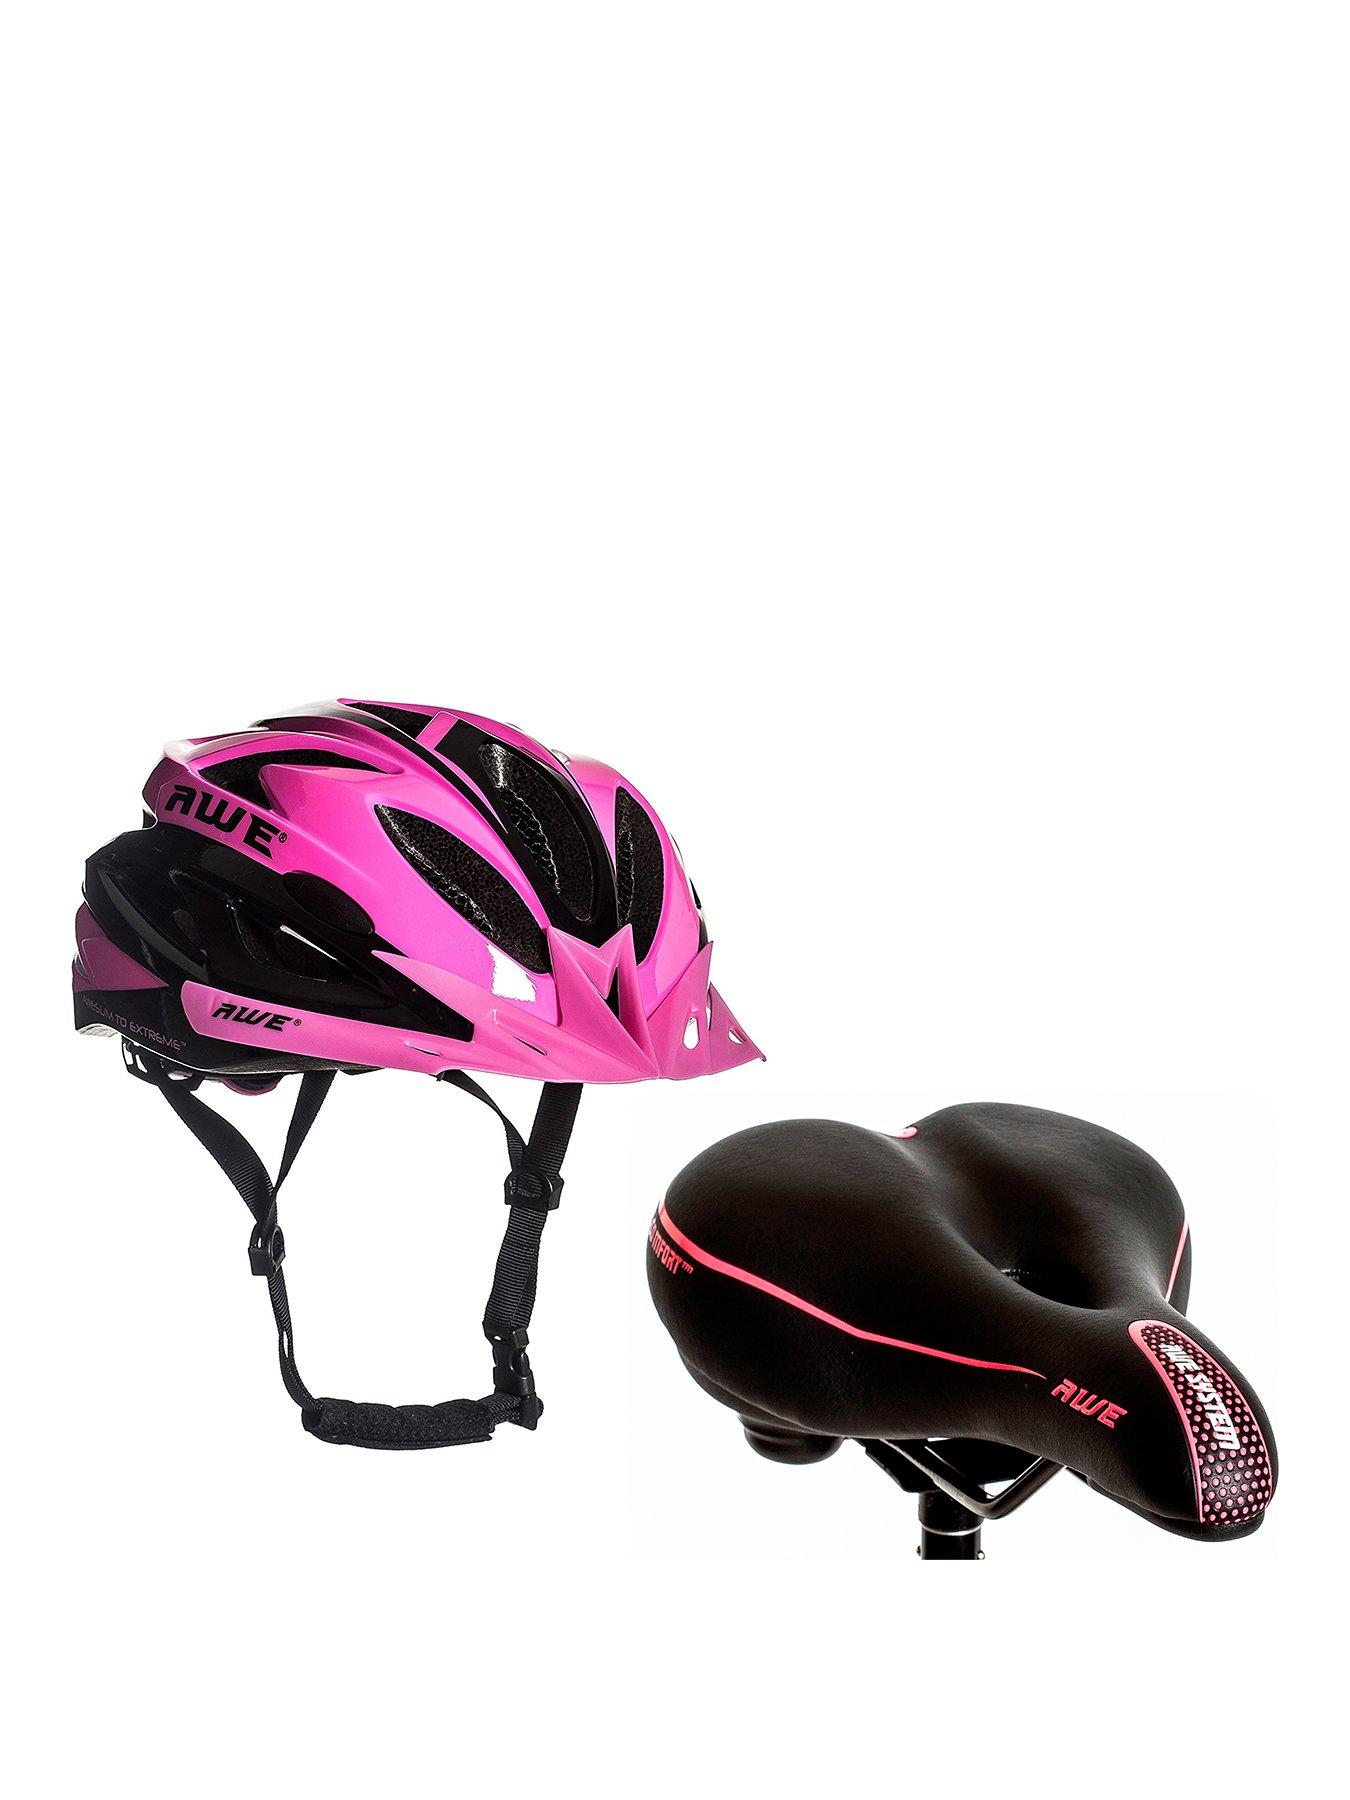 bicycle helmets ireland